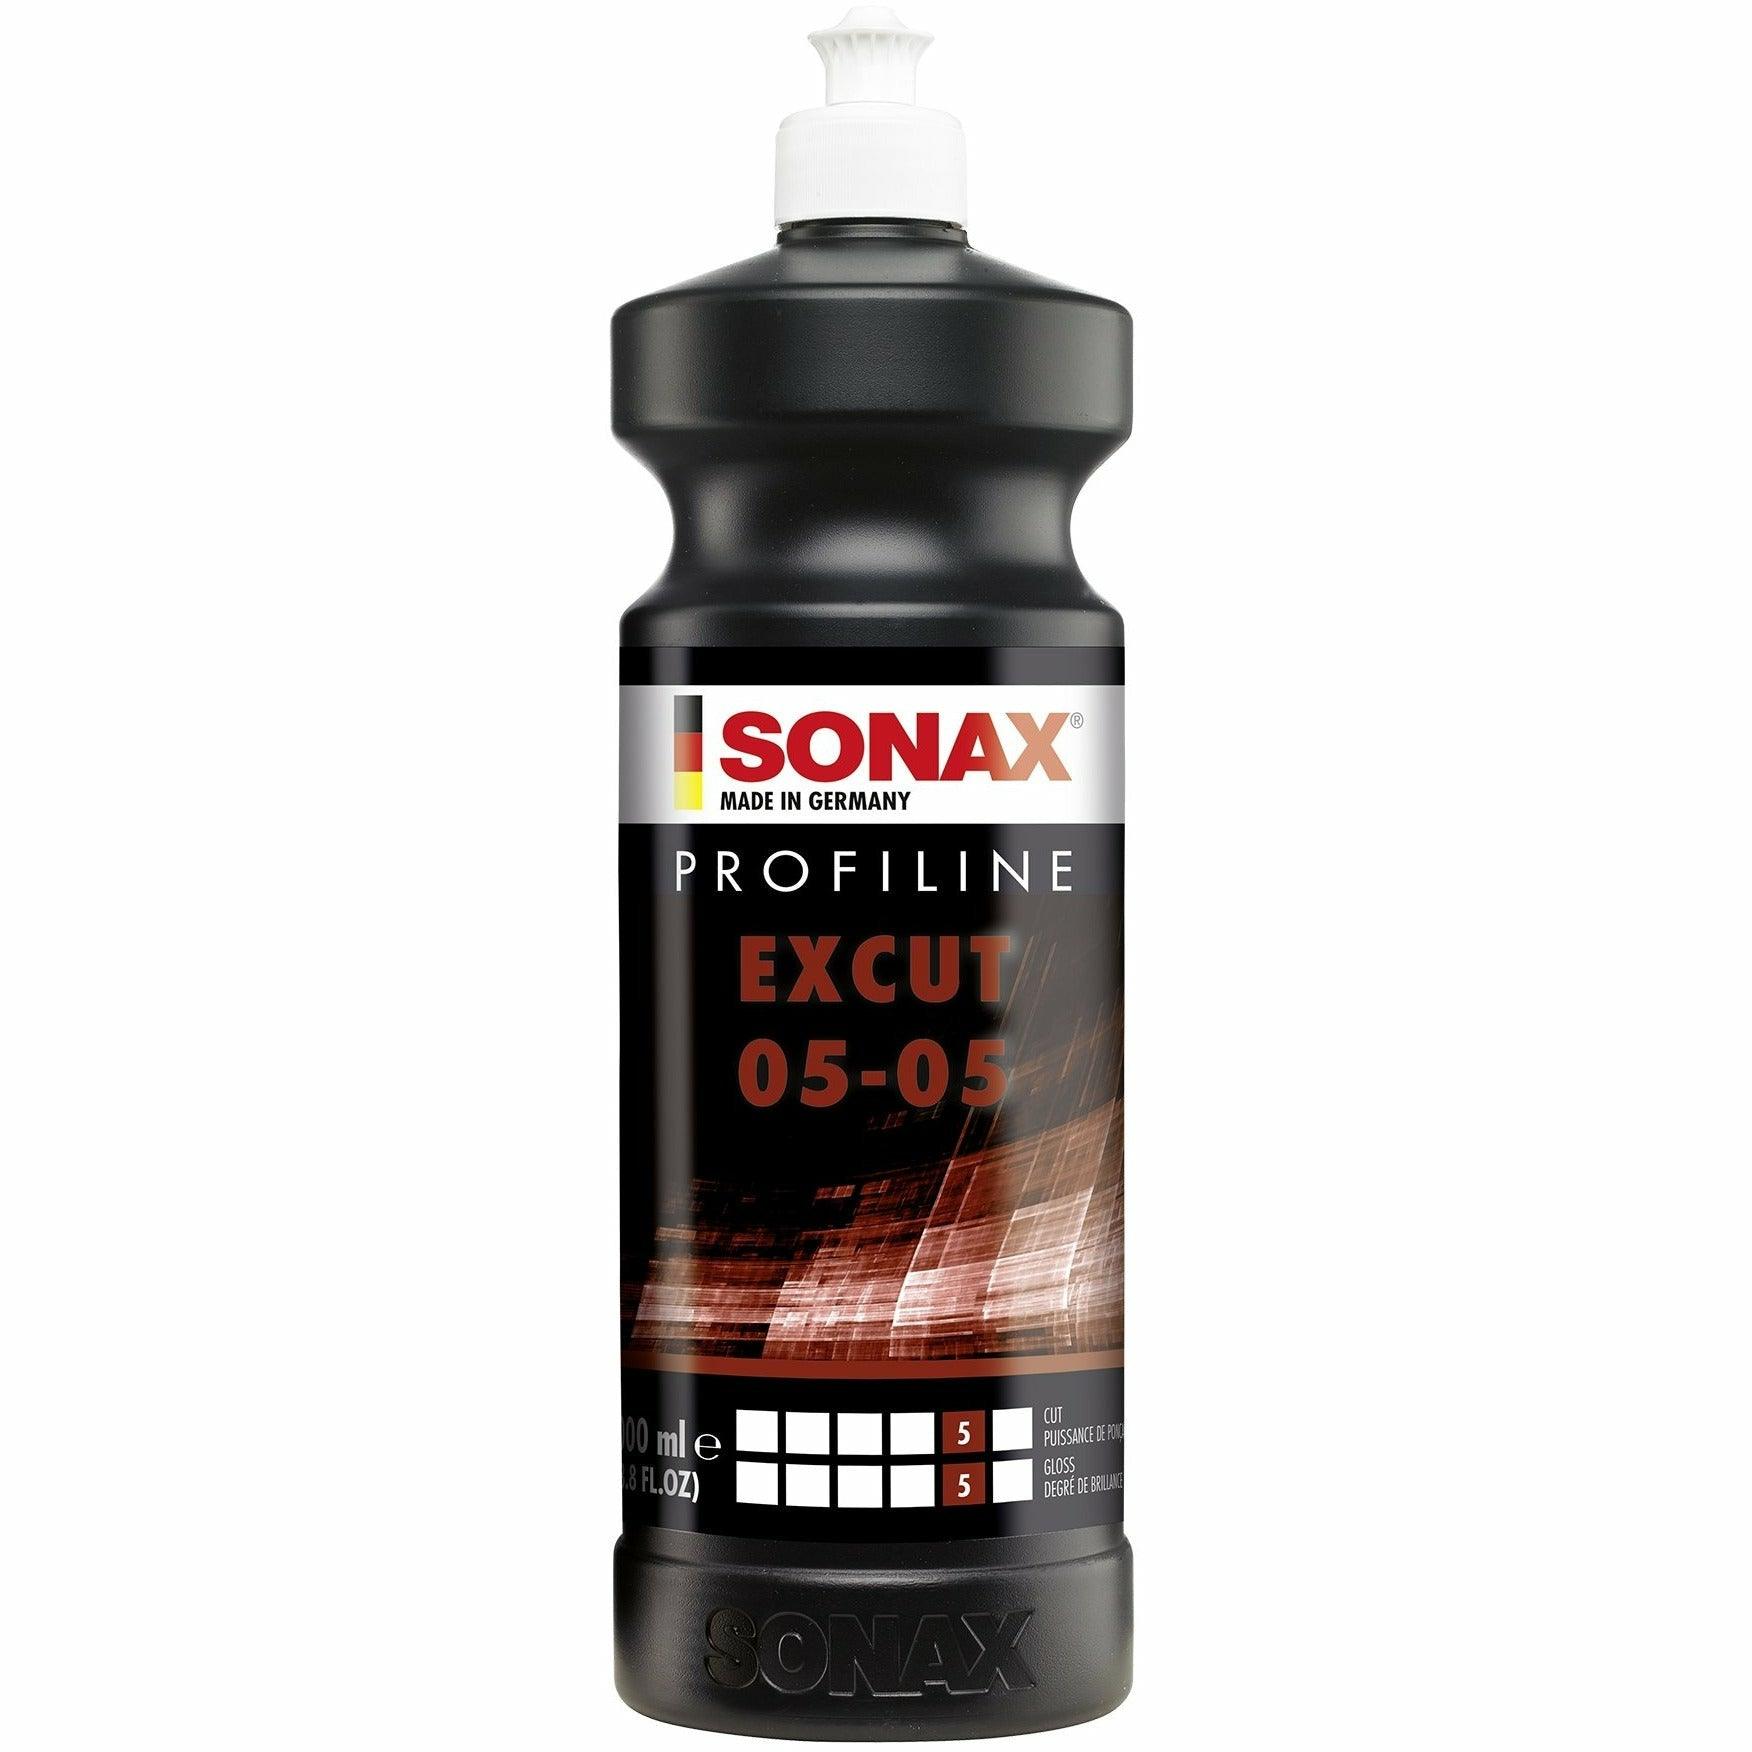 Sonax Profiline EX Cut 05-05 thumbnail